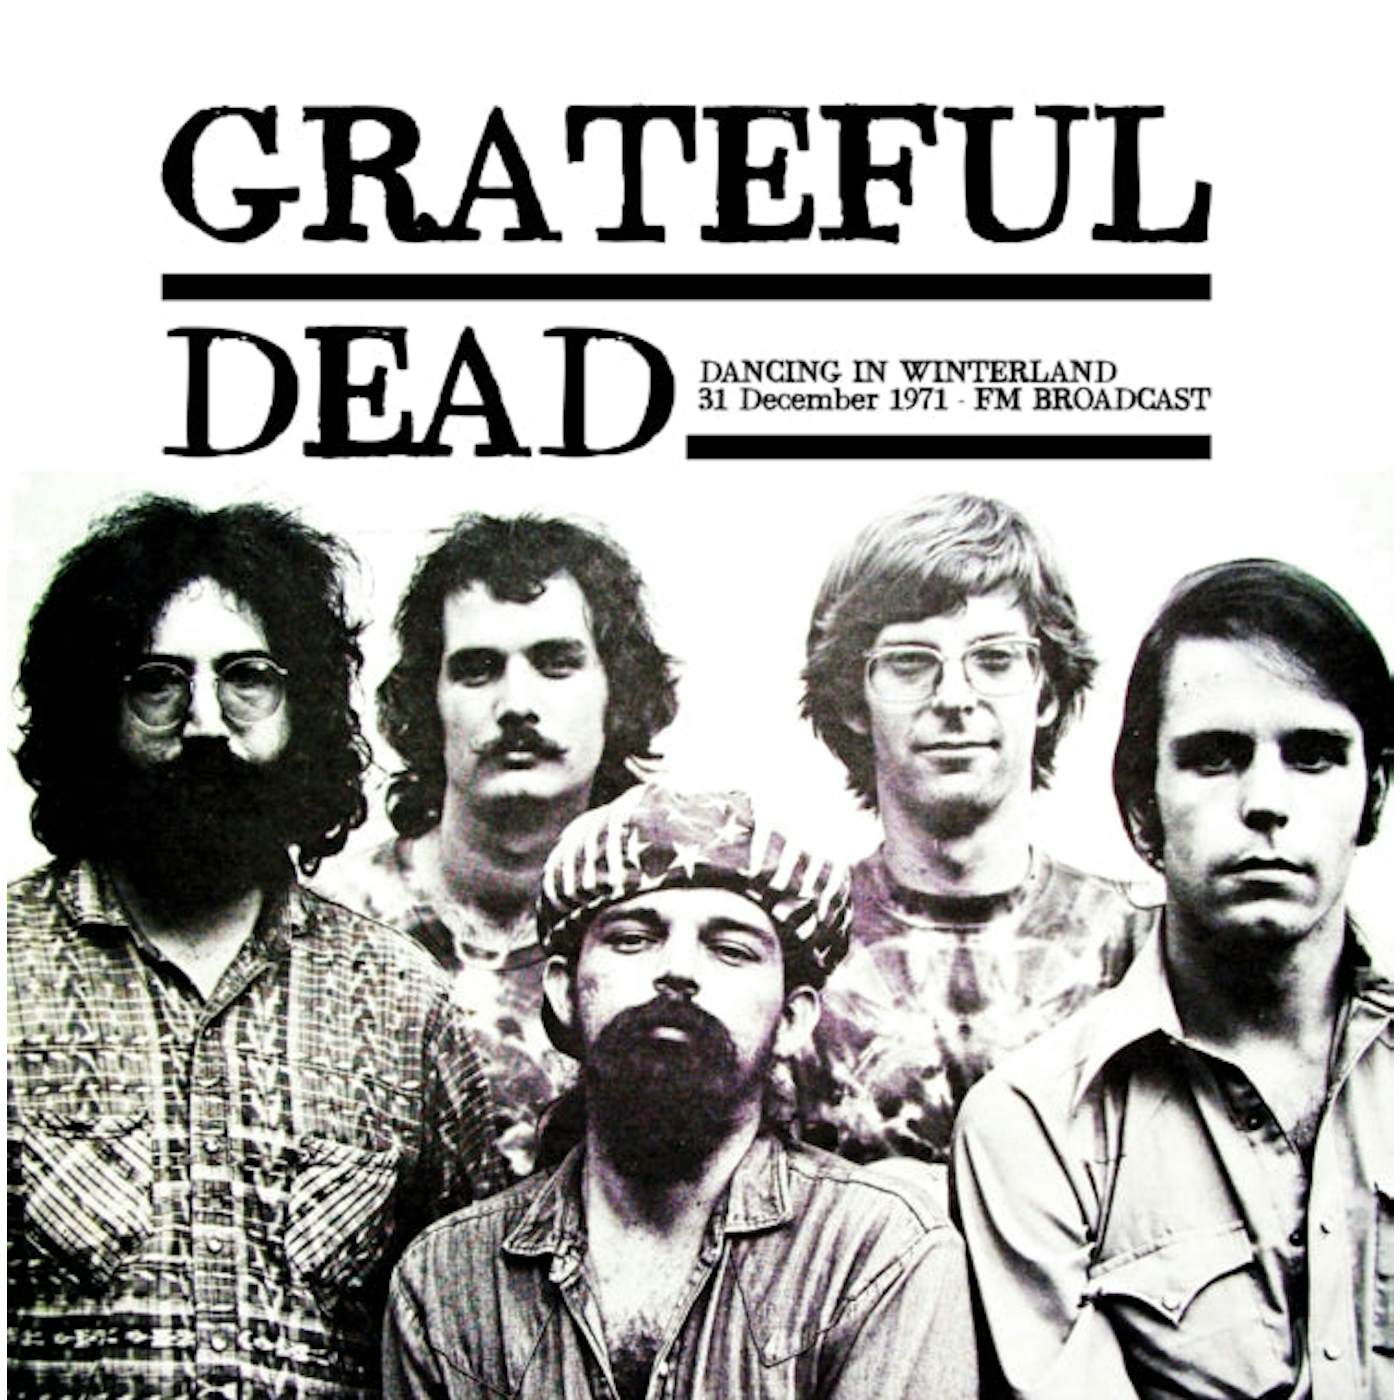 Grateful Dead LP Vinyl Record - Dancing In Winterland - 31 December 19 71 - Fm Broadcast